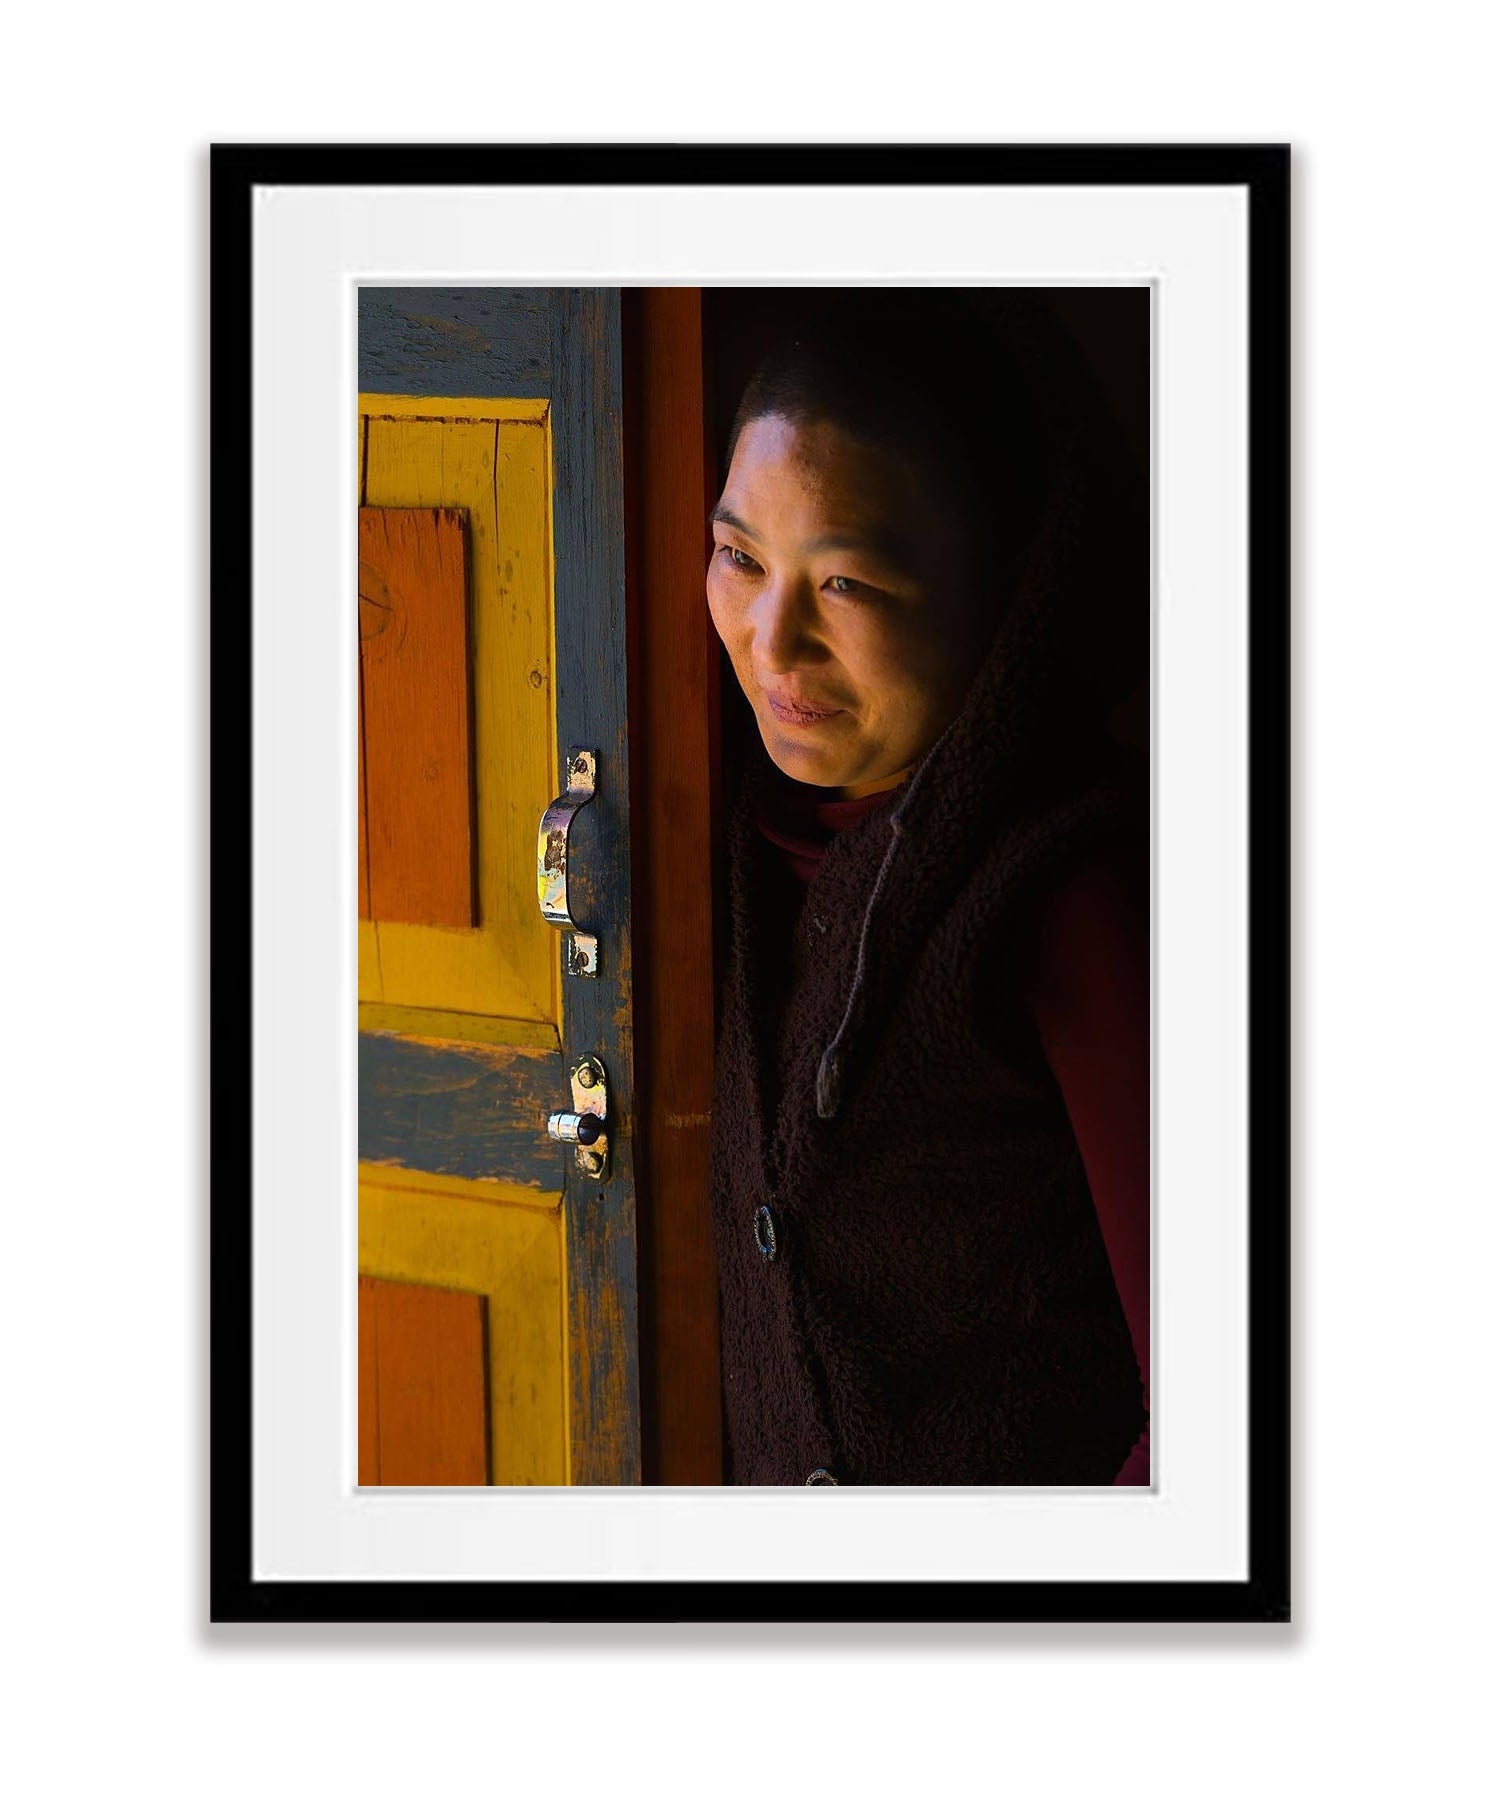 Monk in Light, Bhutan